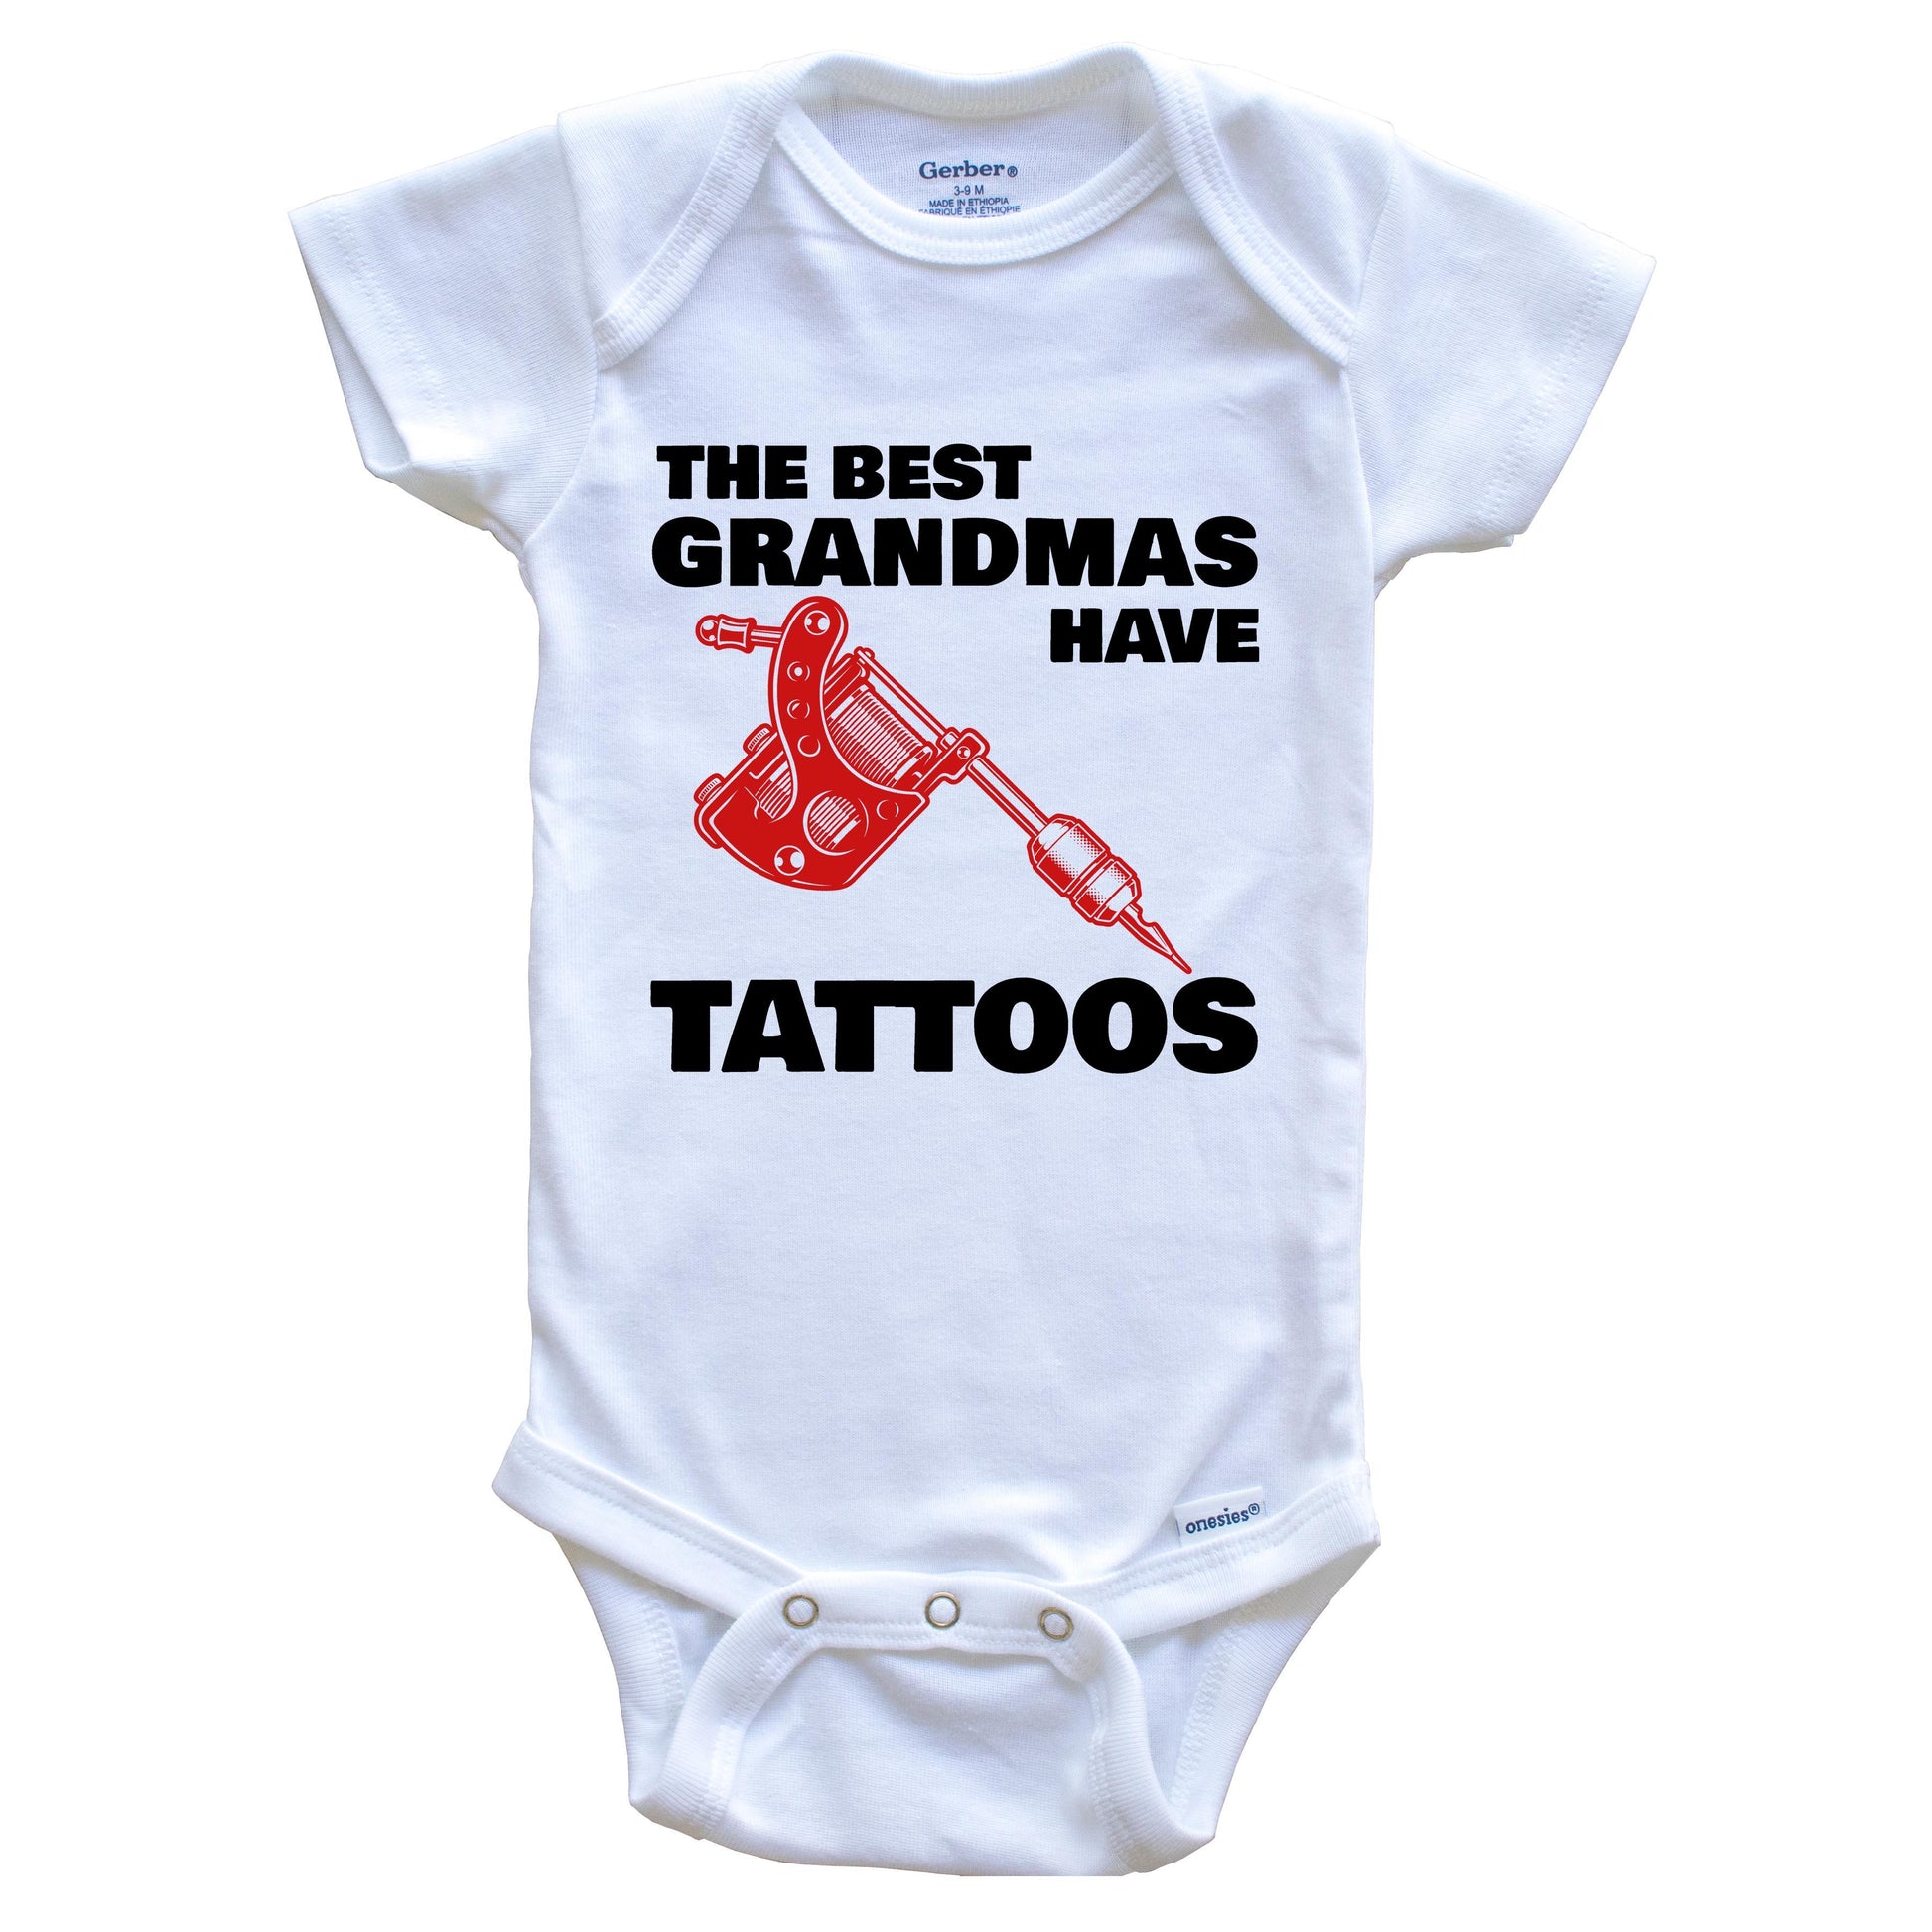 The Best Grandmas Have Tattoos Funny Onesie - One Piece Baby Bodysuit